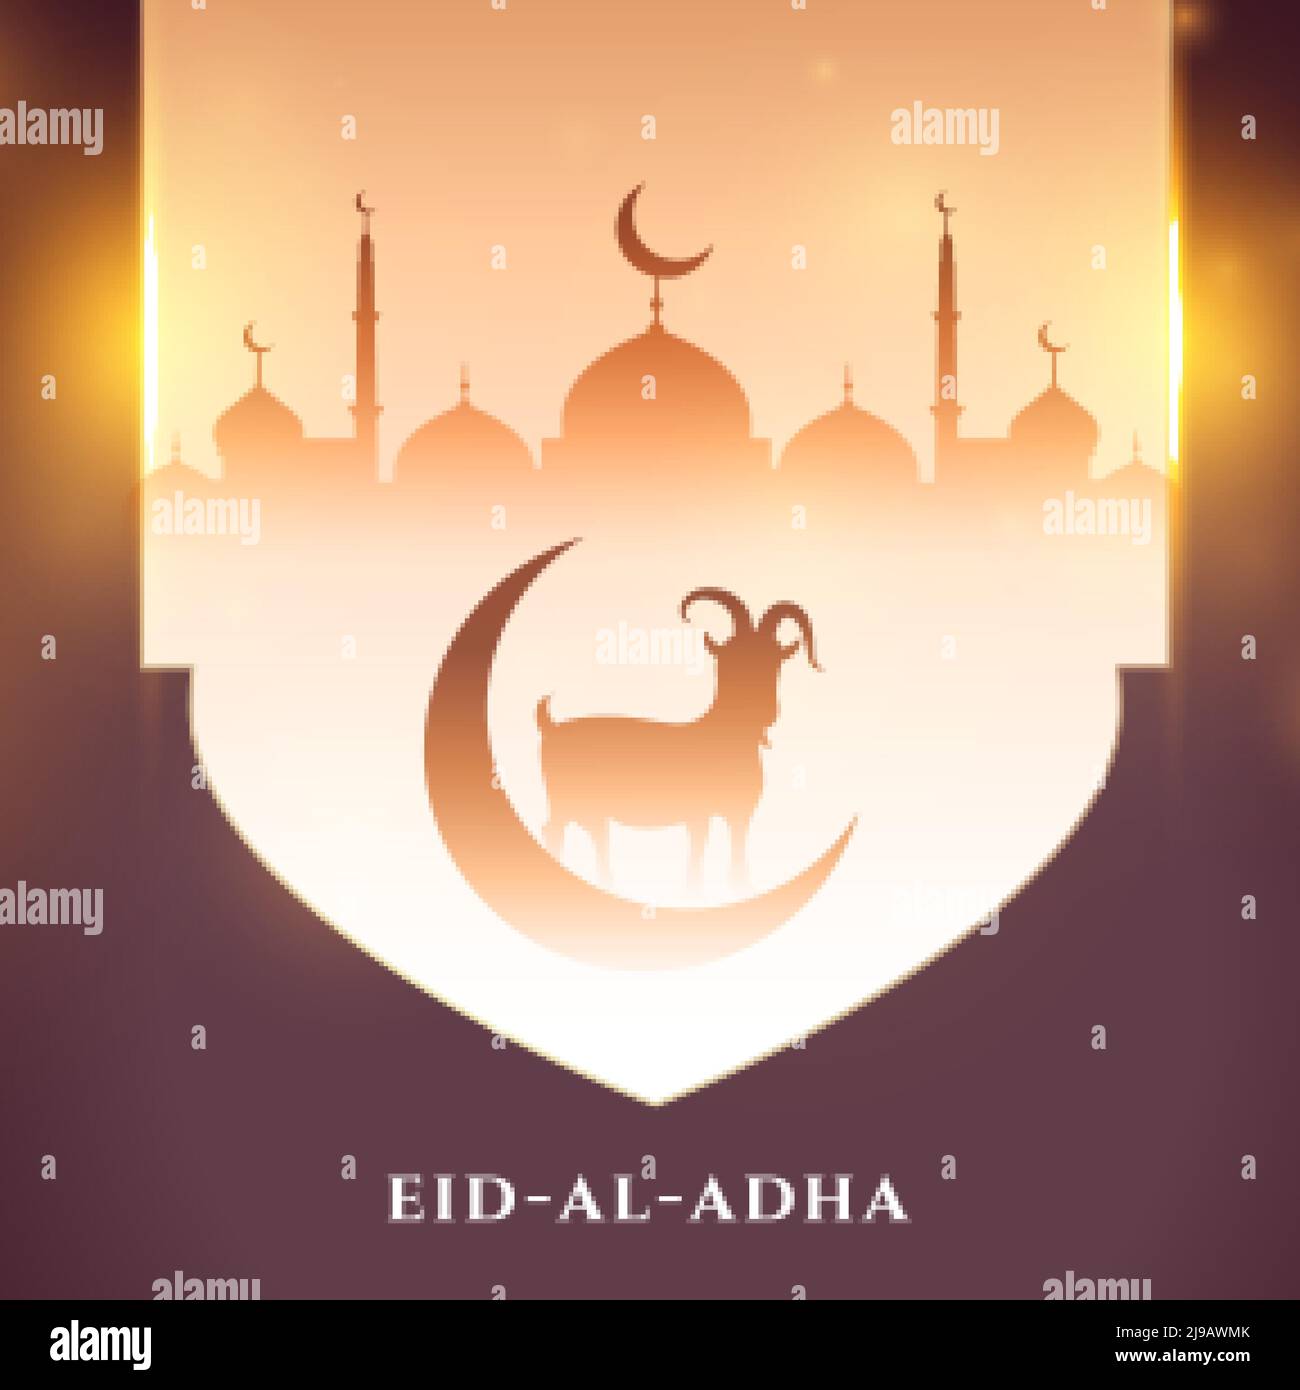 eid al adha bakrid wishes beautiful card design Stock Vector Image ...